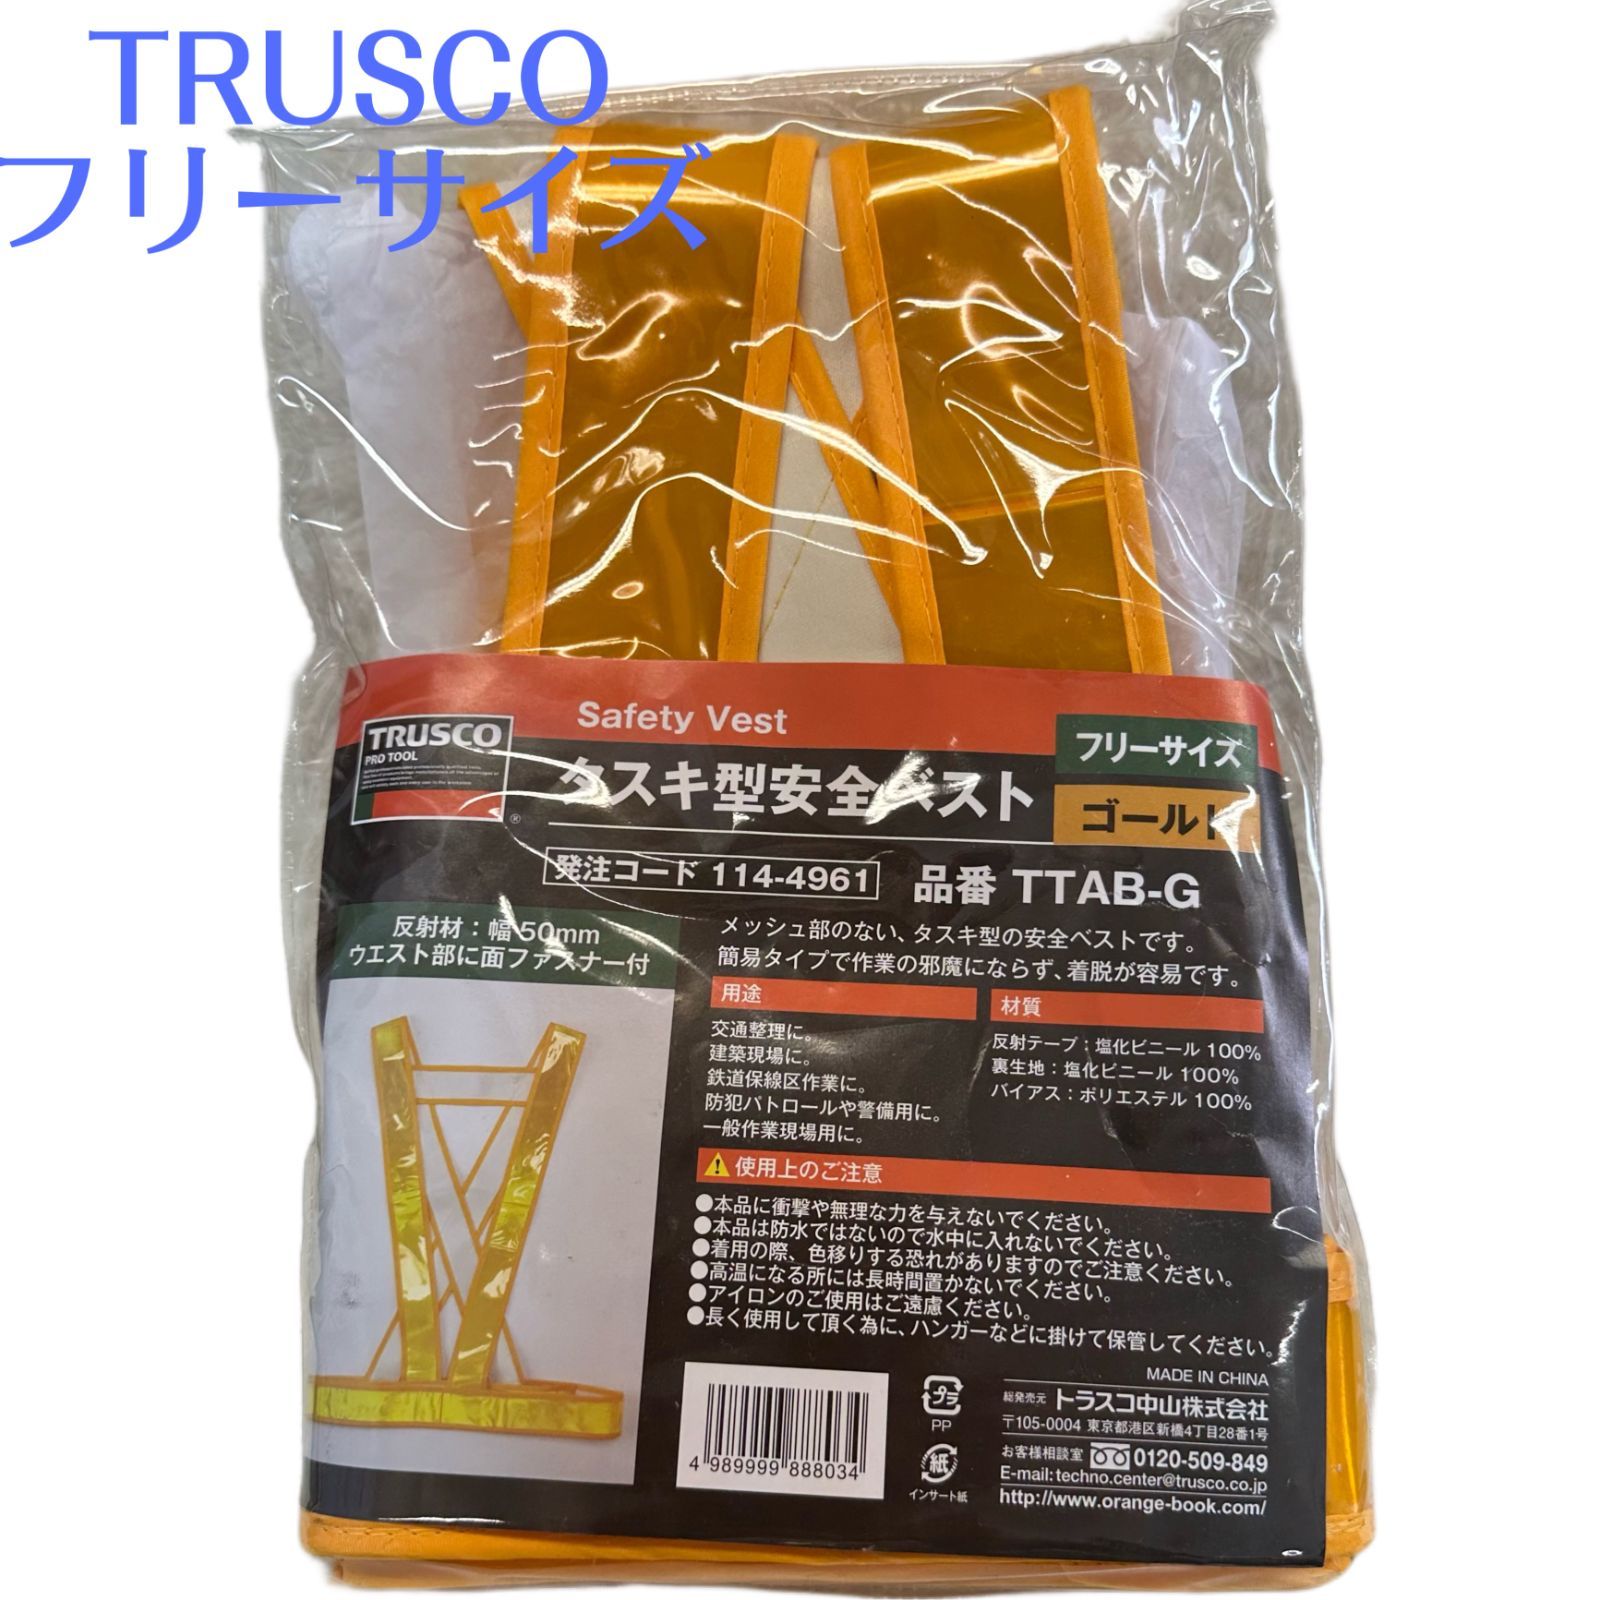 TRUSCO トラスコ タスキ型安全ベスト ゴールド フリーサイズ 品番TTAB-G メルカリShops